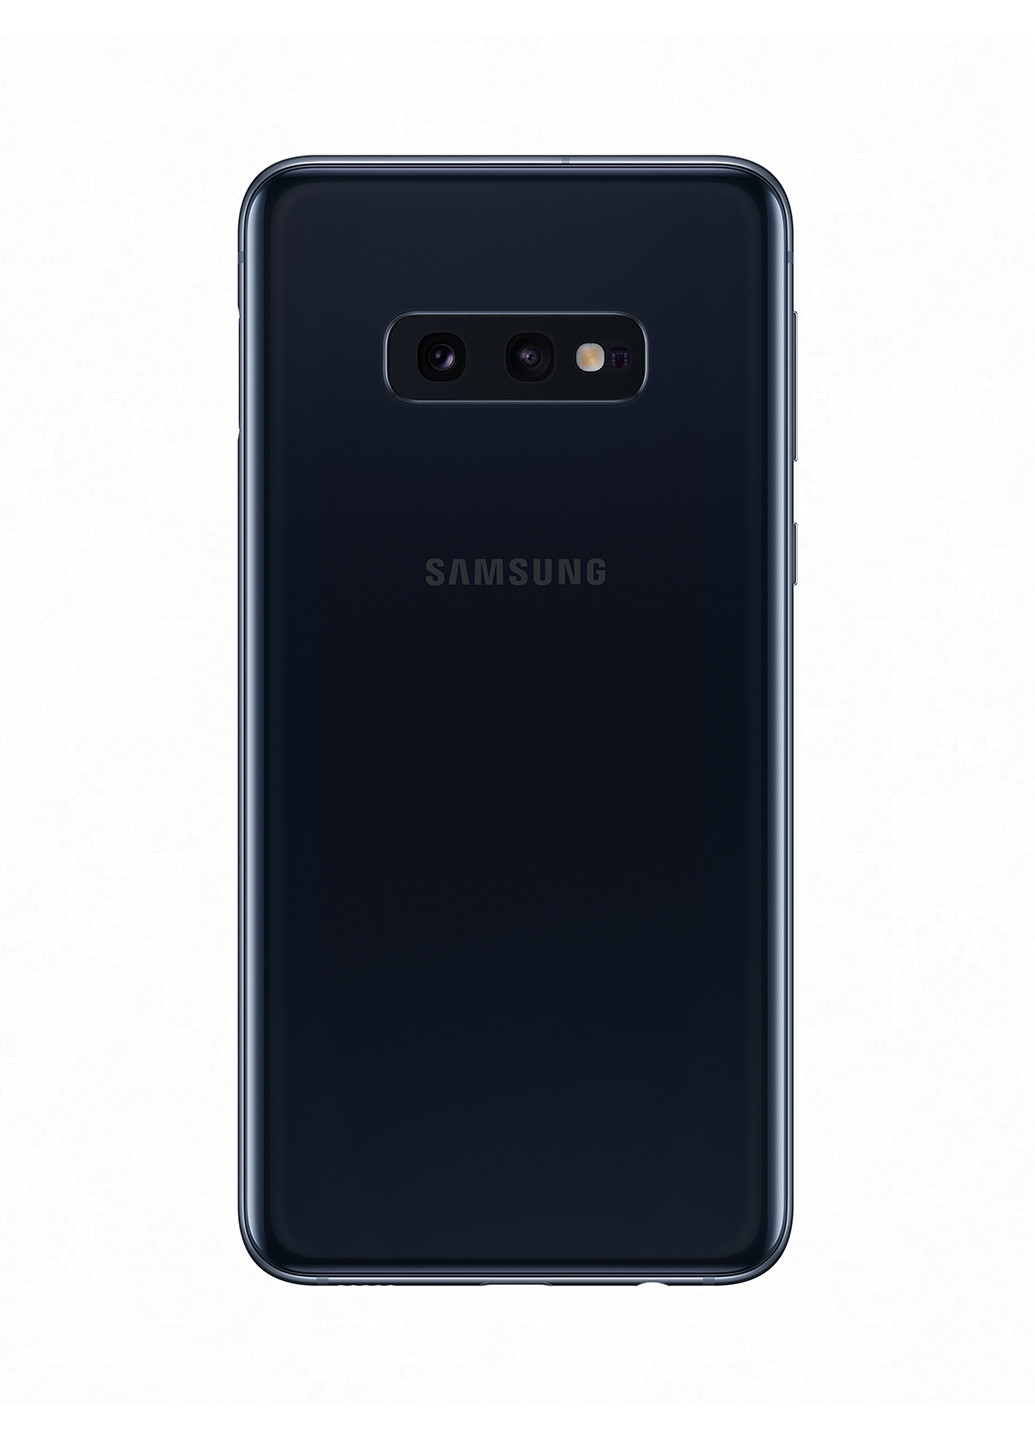 Смартфон Samsung galaxy s10e 6/128gb black (sm-g970fzkdsek) (151485044)